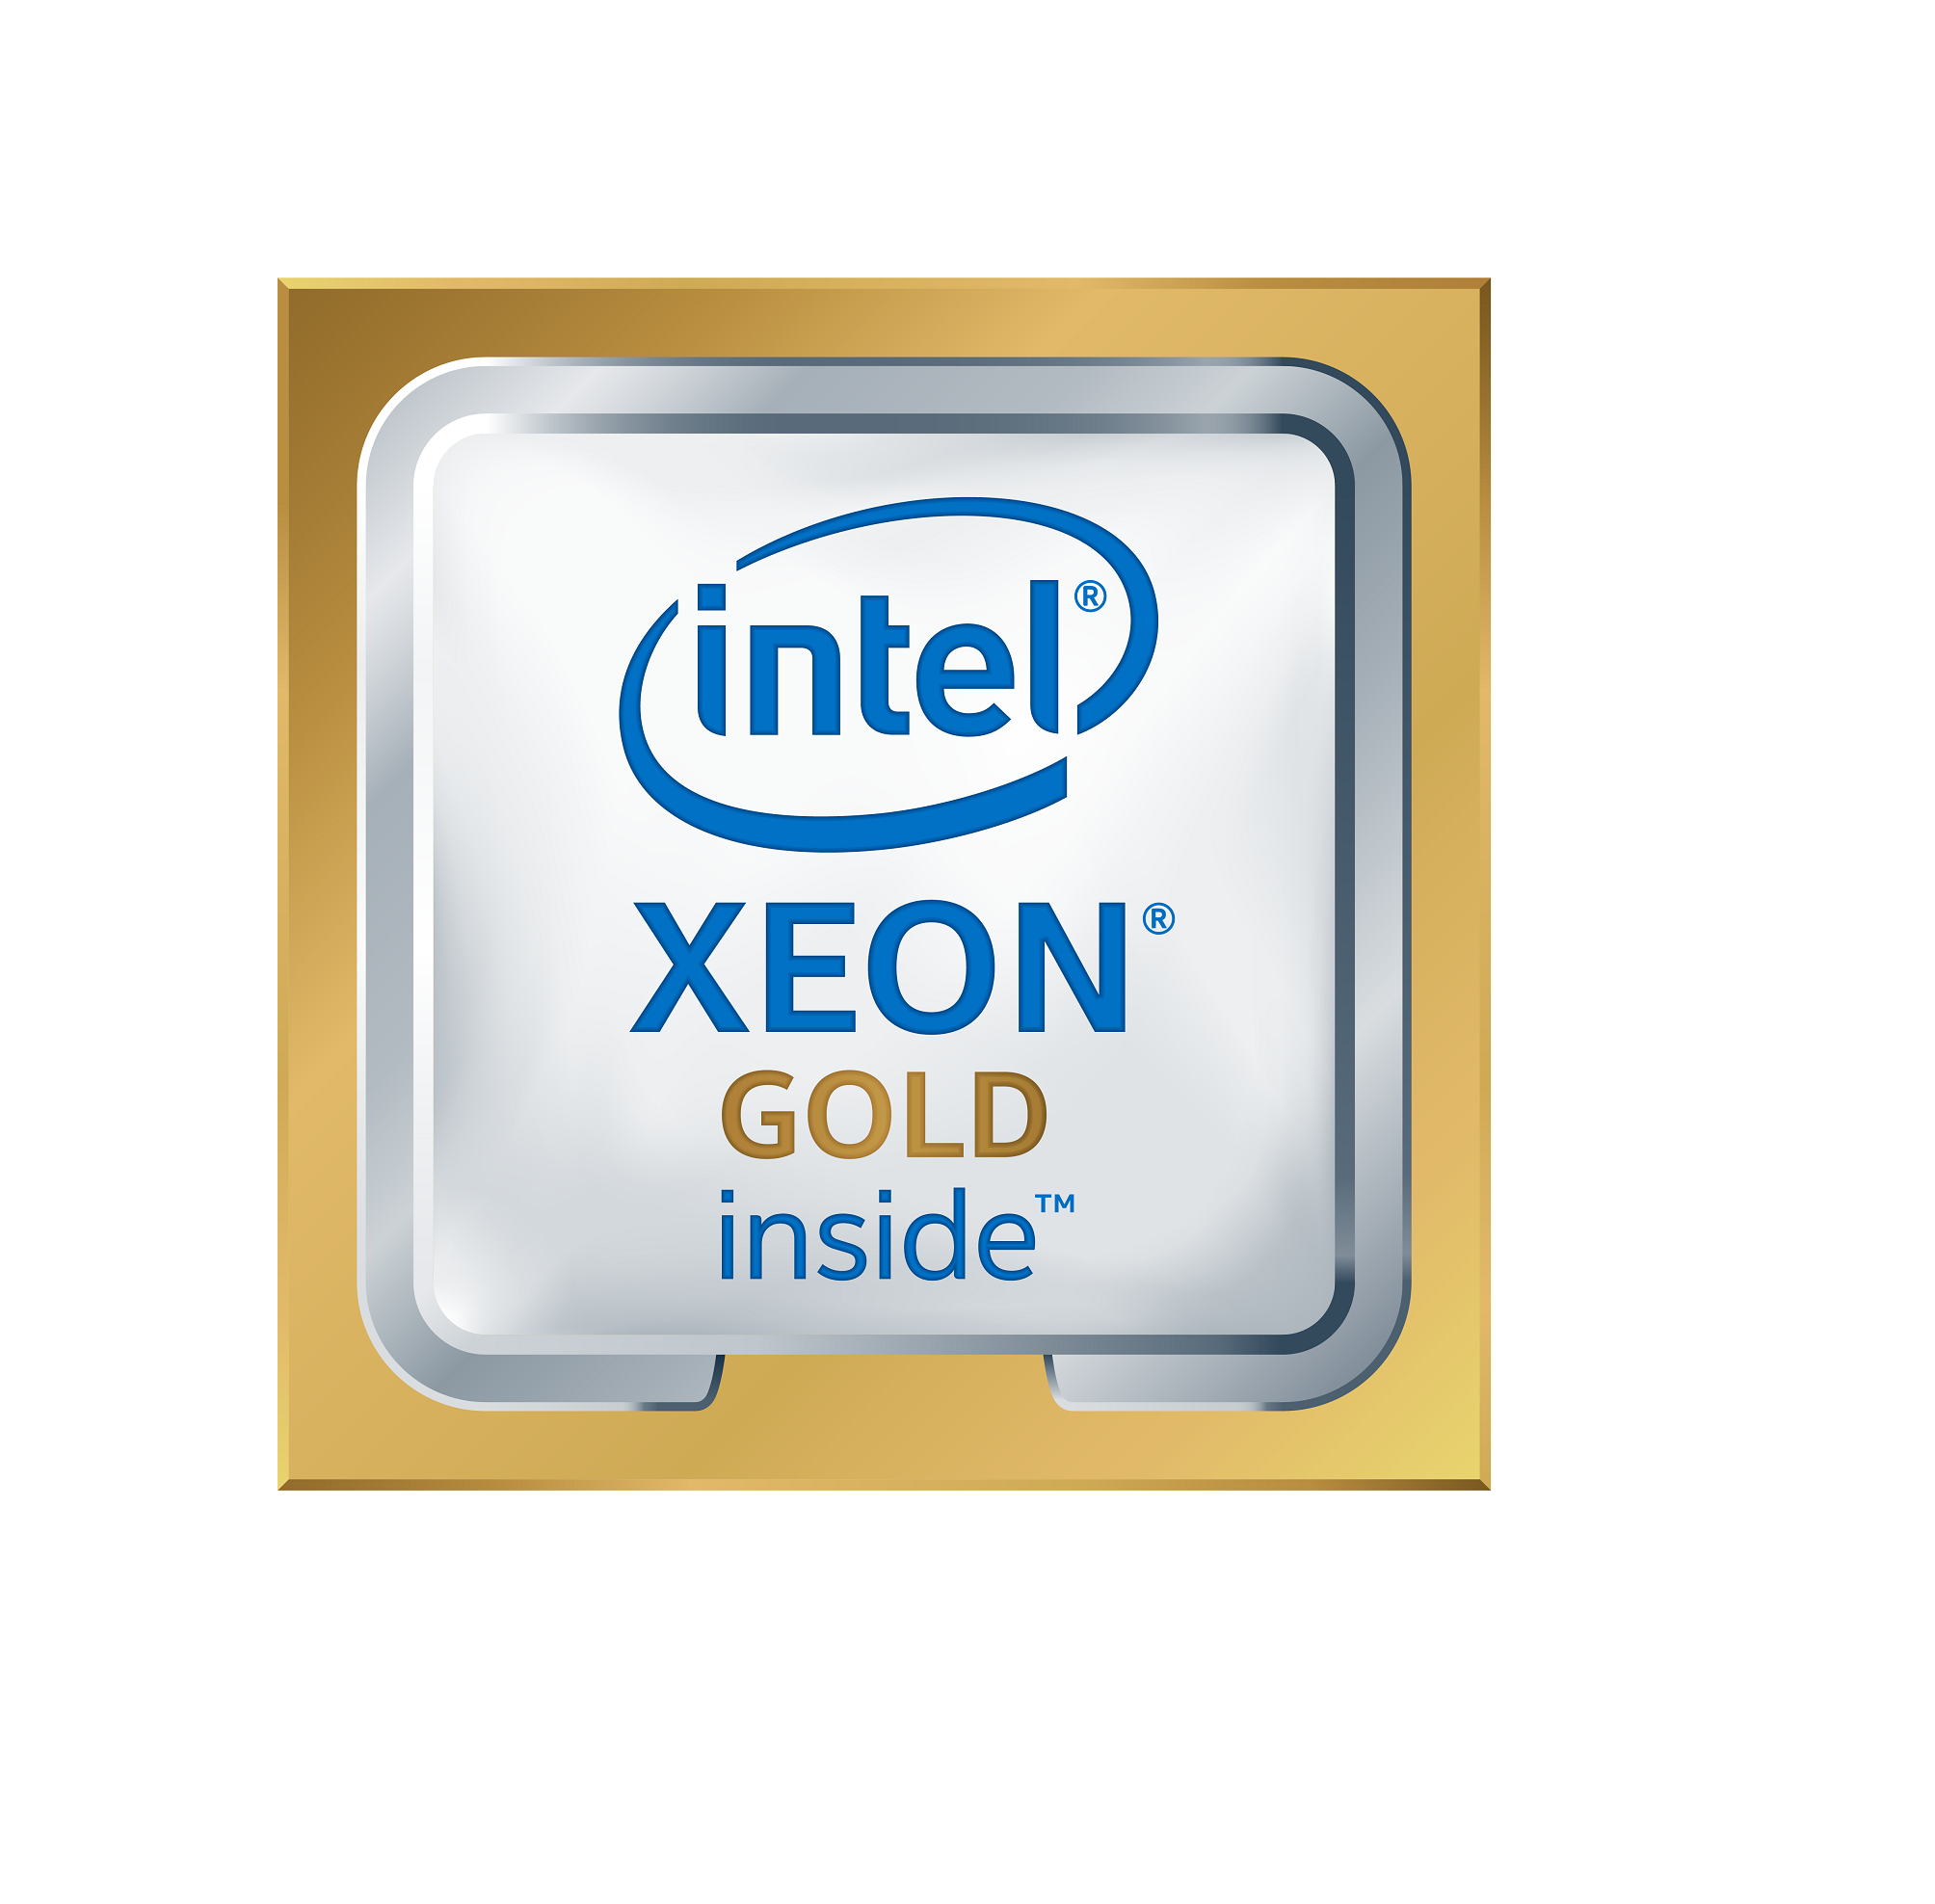 Intel Xeon Gold 5120 Processor (19.25M Cache, 2.20 GHz) FC LGA14B